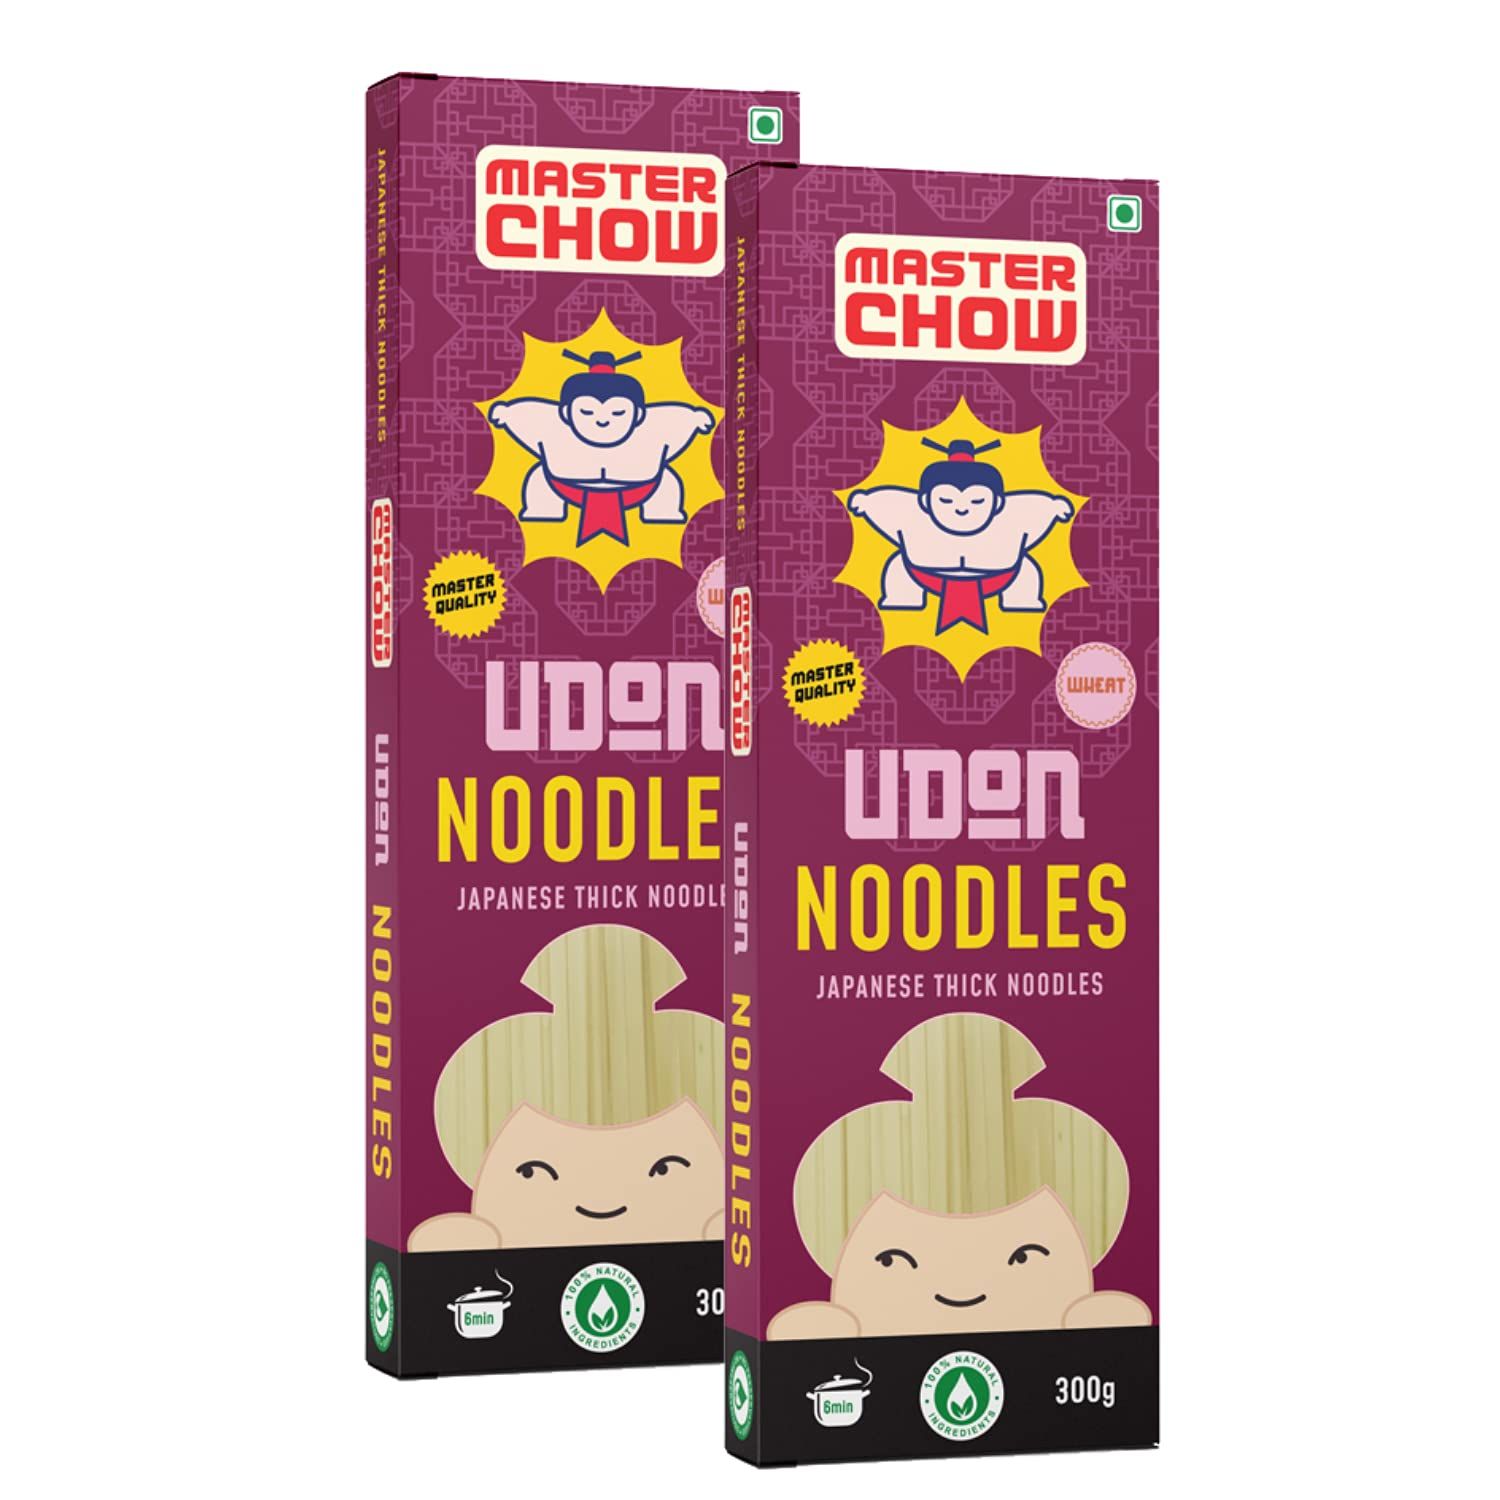 Master Chow Udon Noodles Image